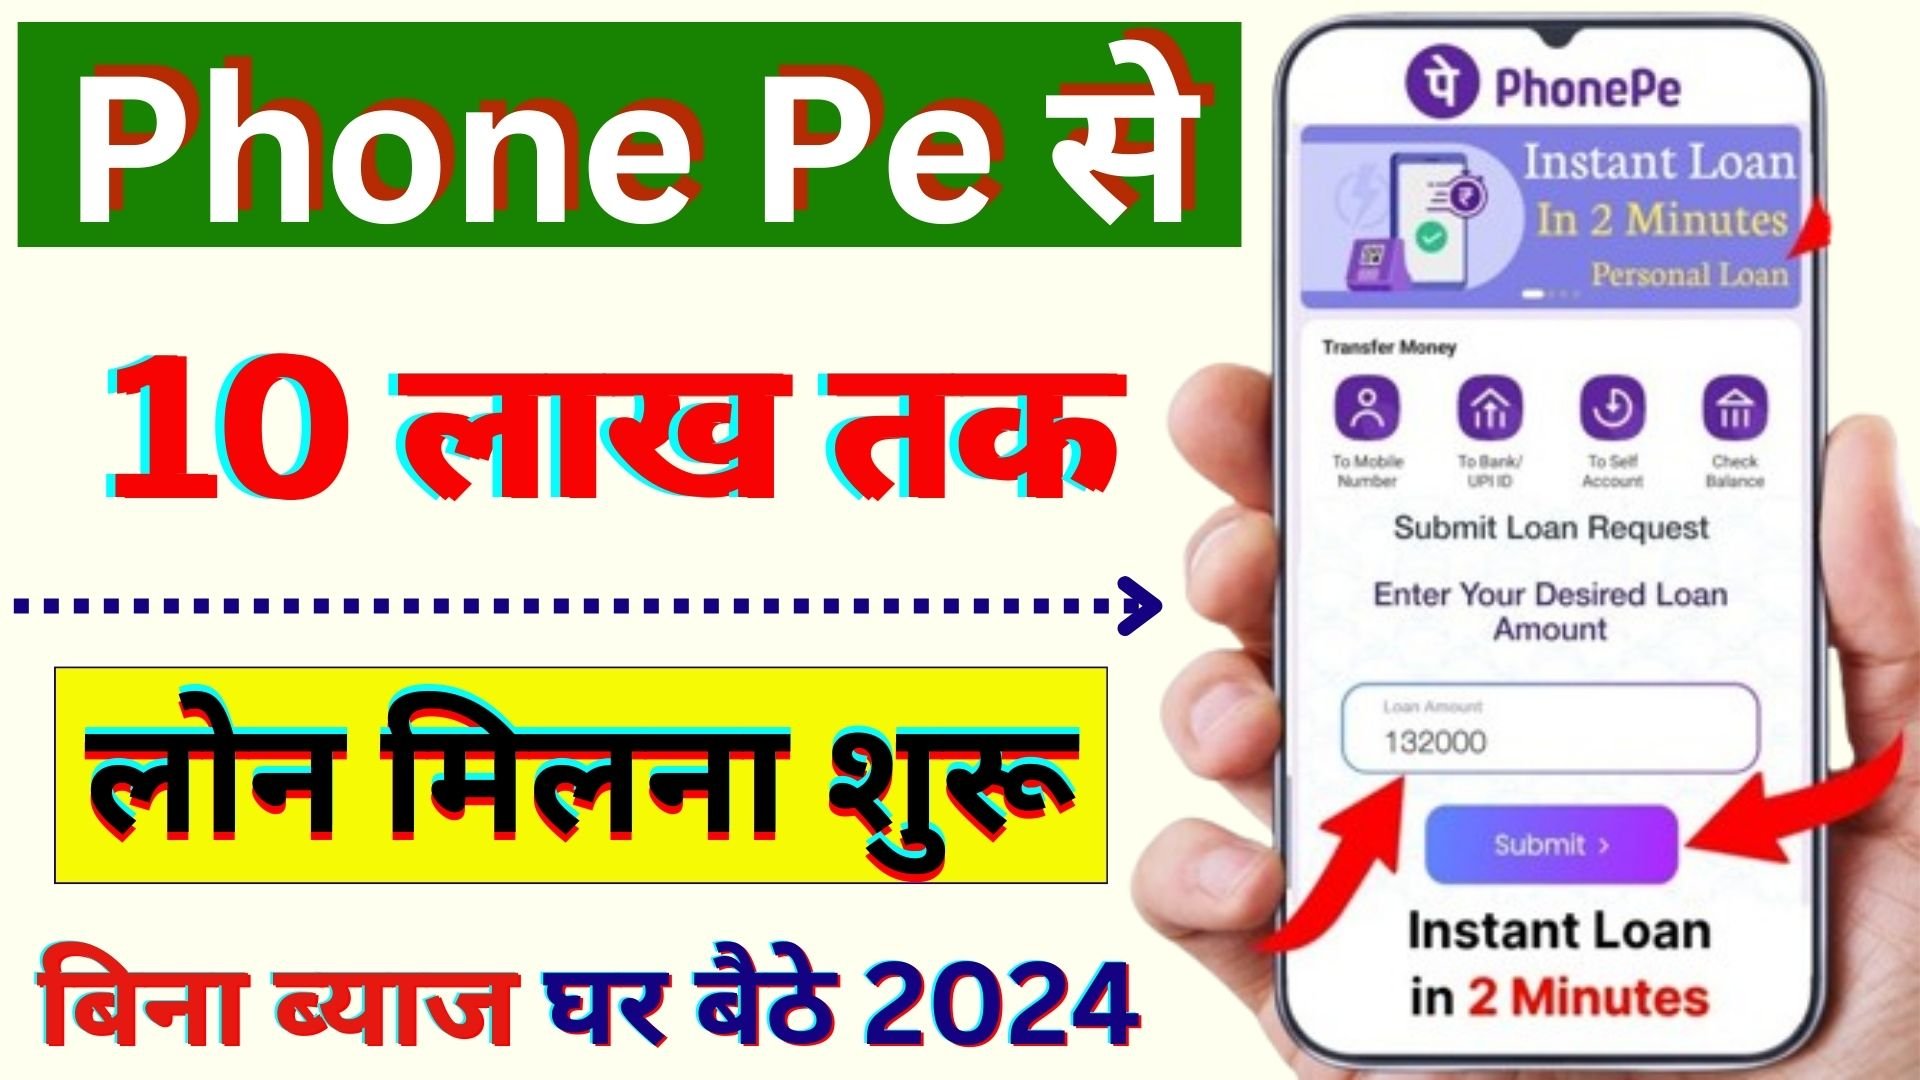 Phone Pe se loan kaise lete hain 2024 : phonepe loan kaise milta hai यहाँ से जाने लोन लेने का आसान तरीका